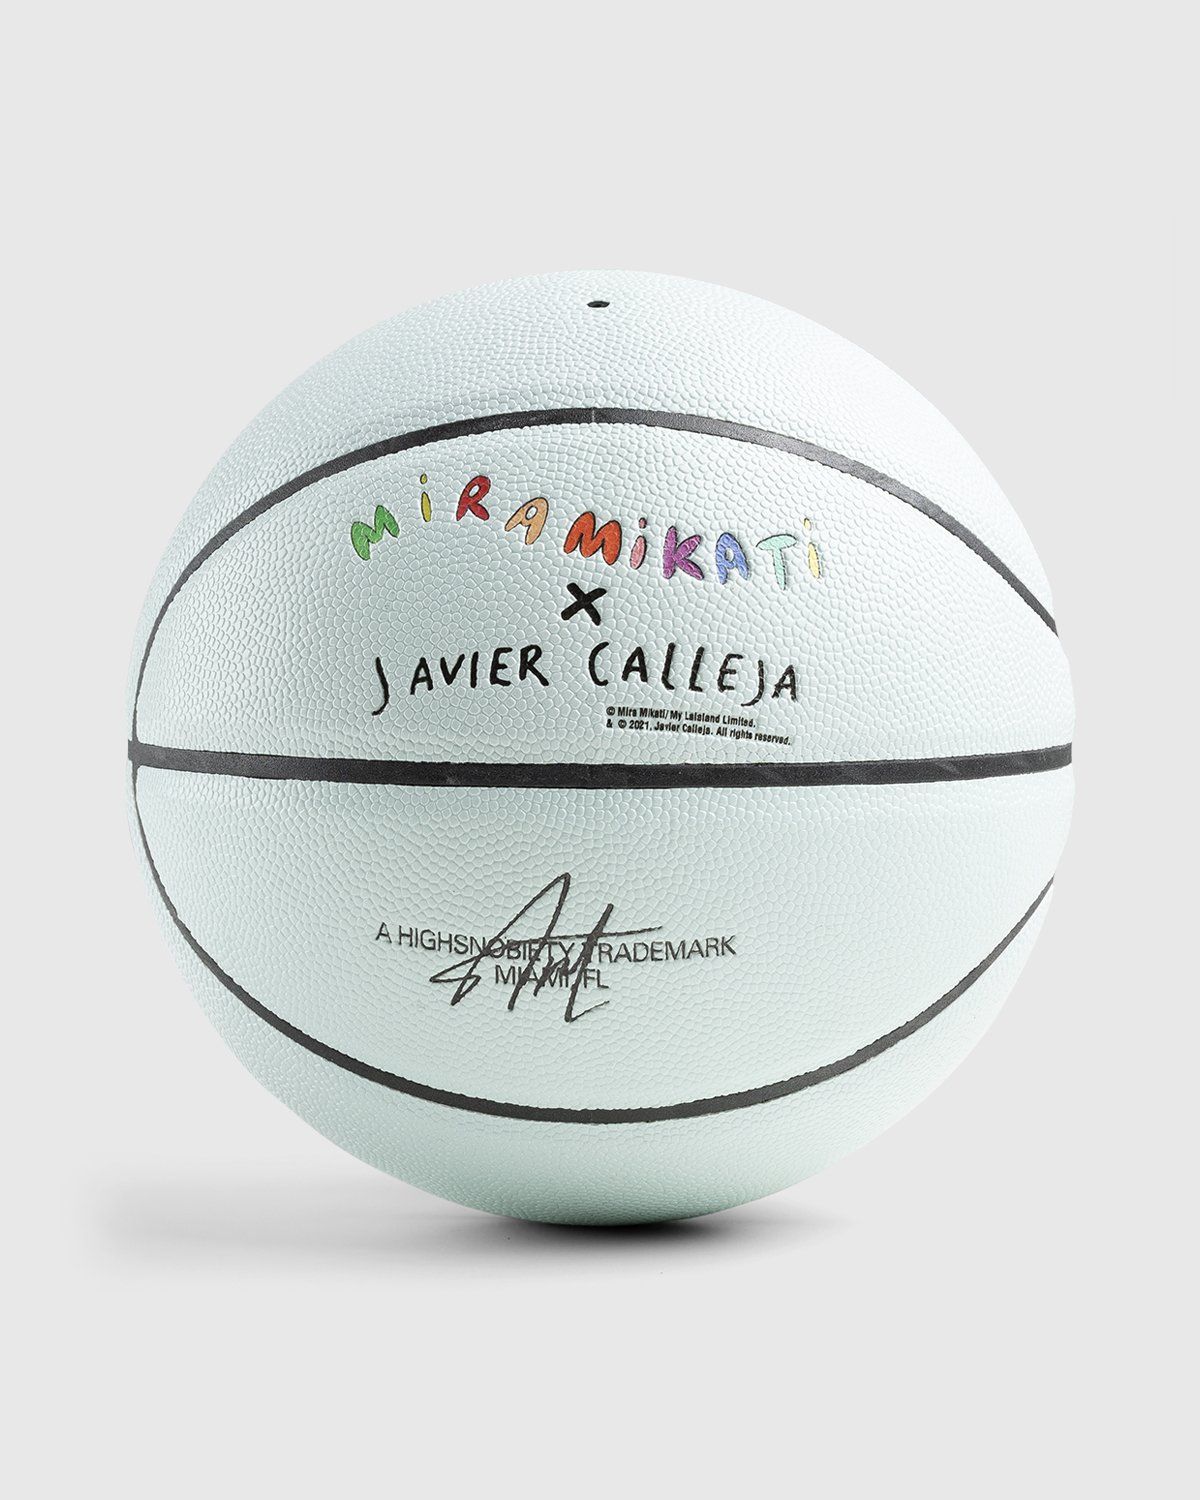 Javier Calleja x Mira Mikati x Highsnobiety – Basketball - Lifestyle - Blue - Image 2